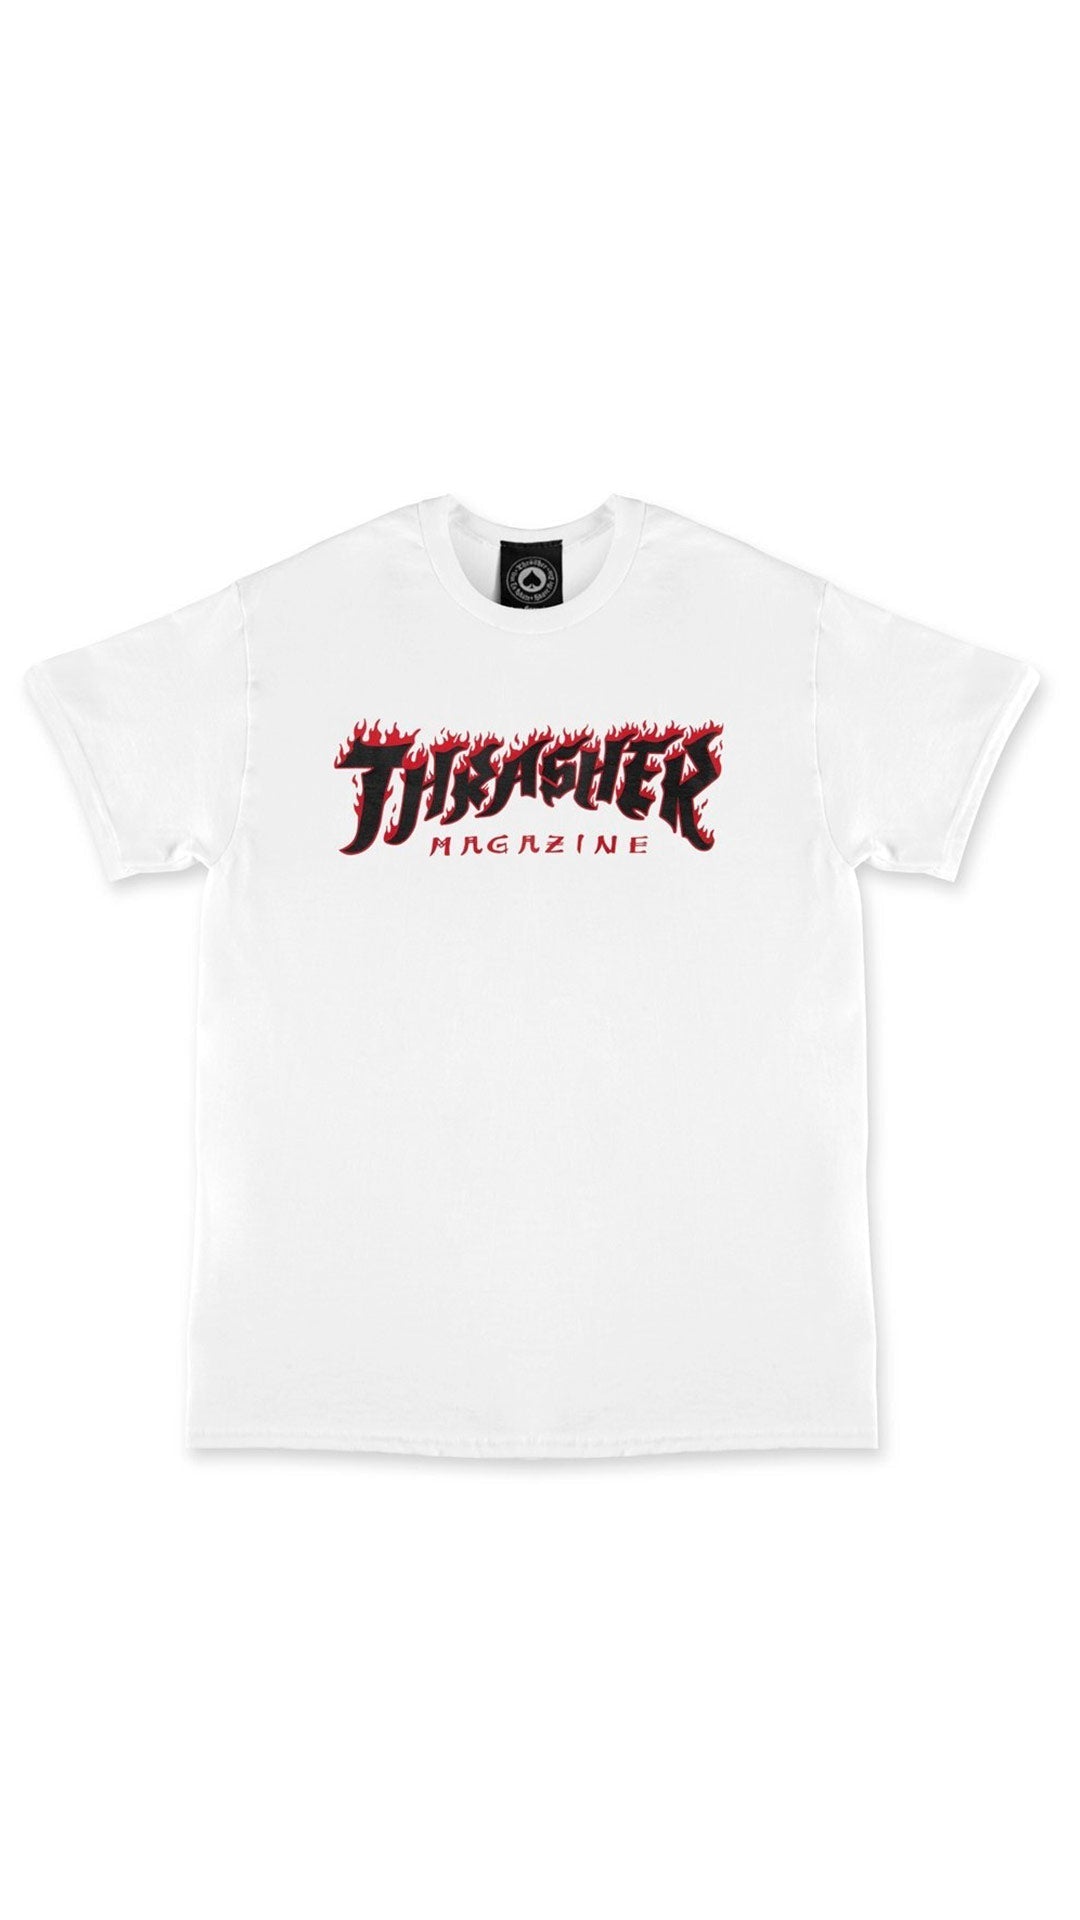 Thrasher Possessed Tee Black-Camiseta Ropa Thrasher Magazine 